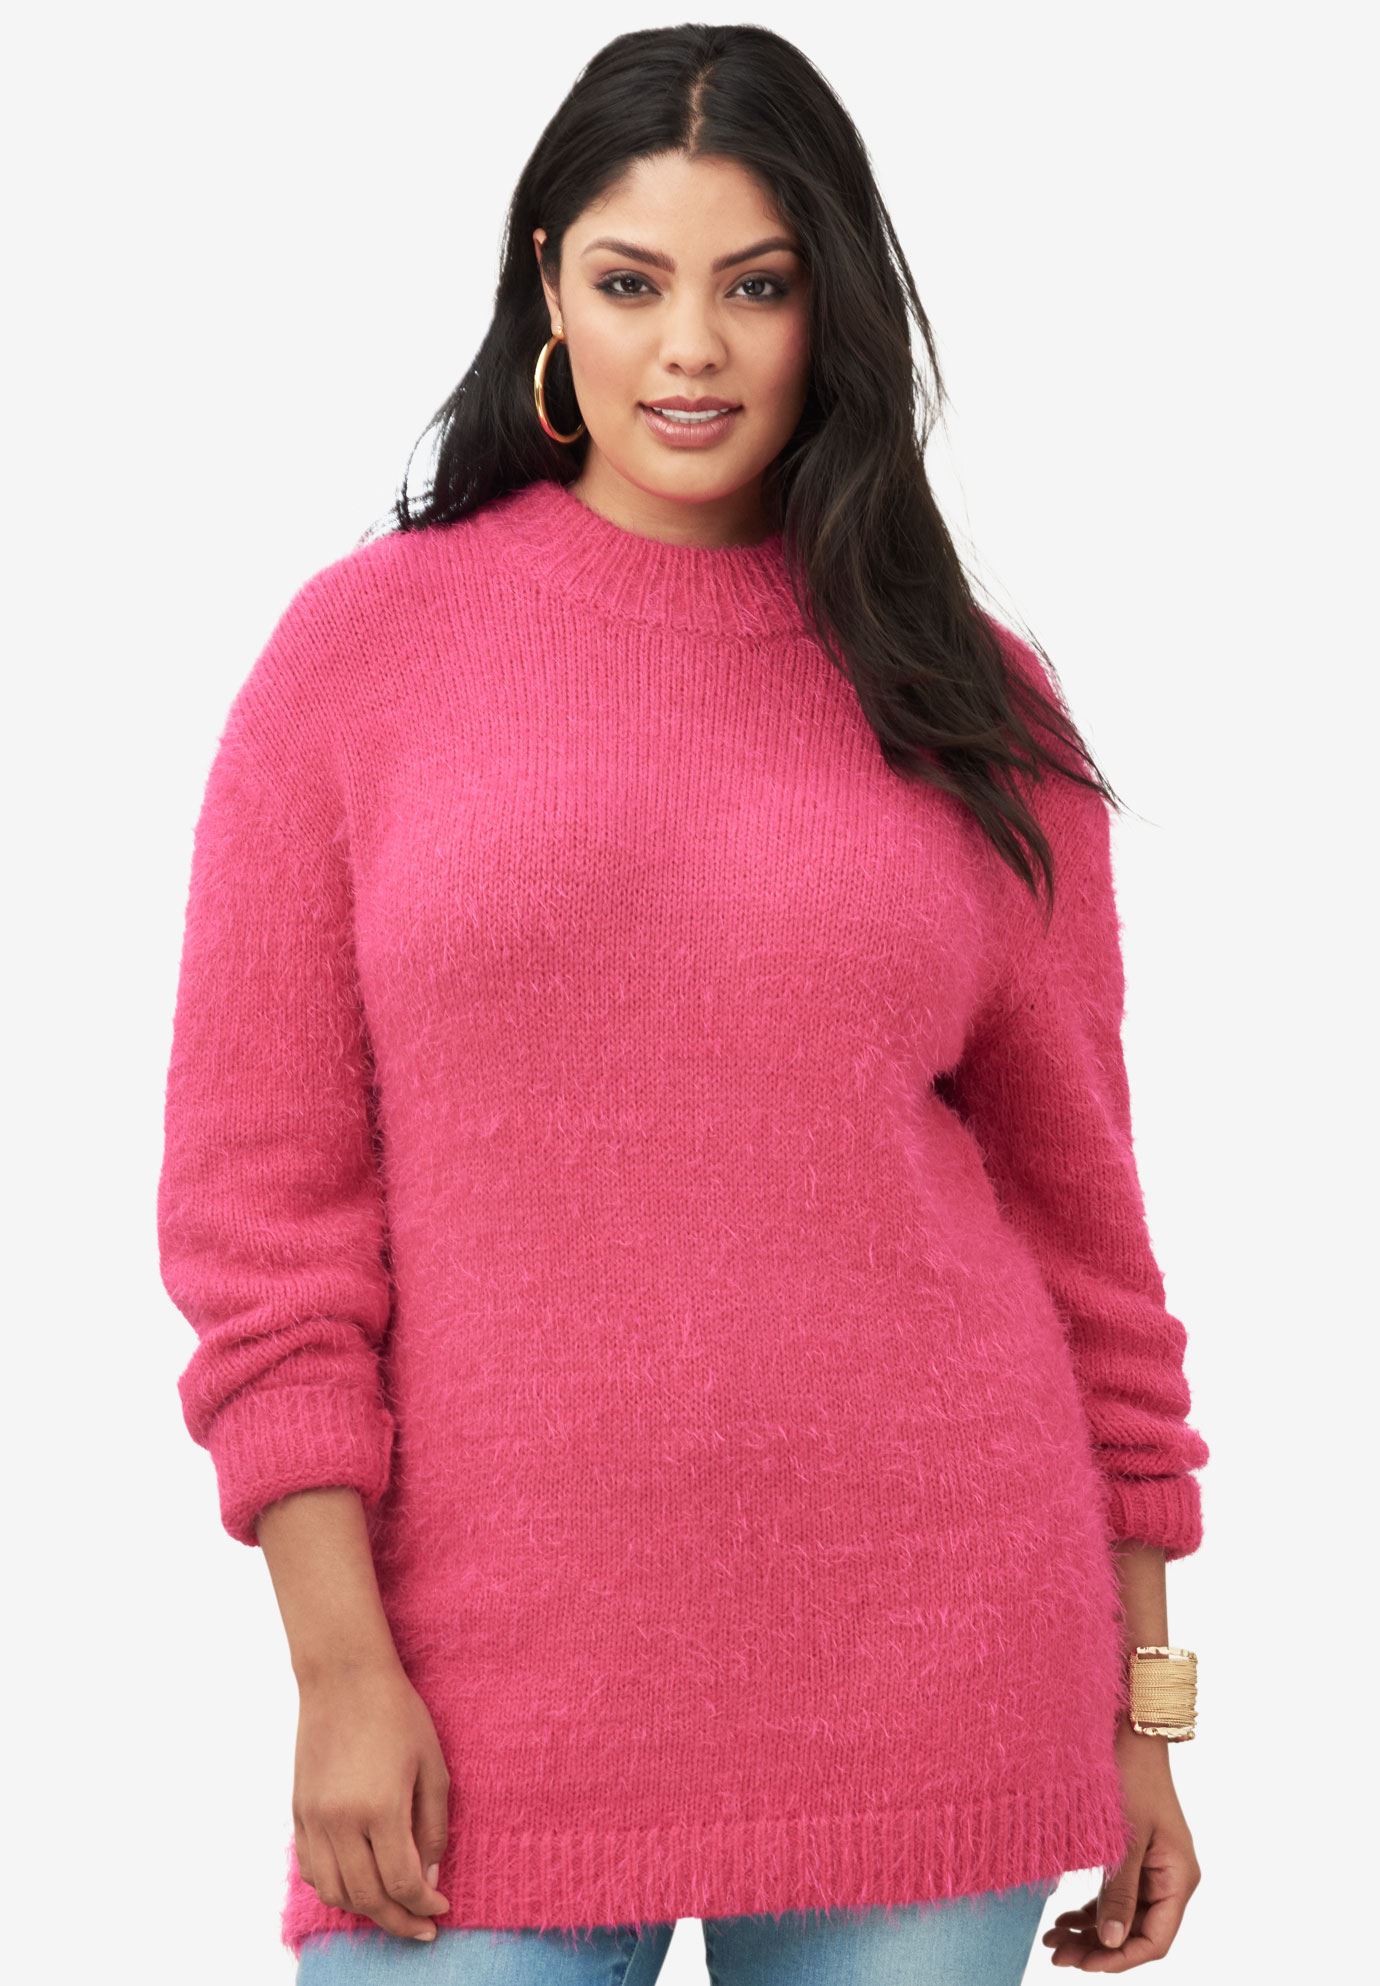 Plus size sweaters for womengkdyejgyfvbdyg hfdj cute skyrim